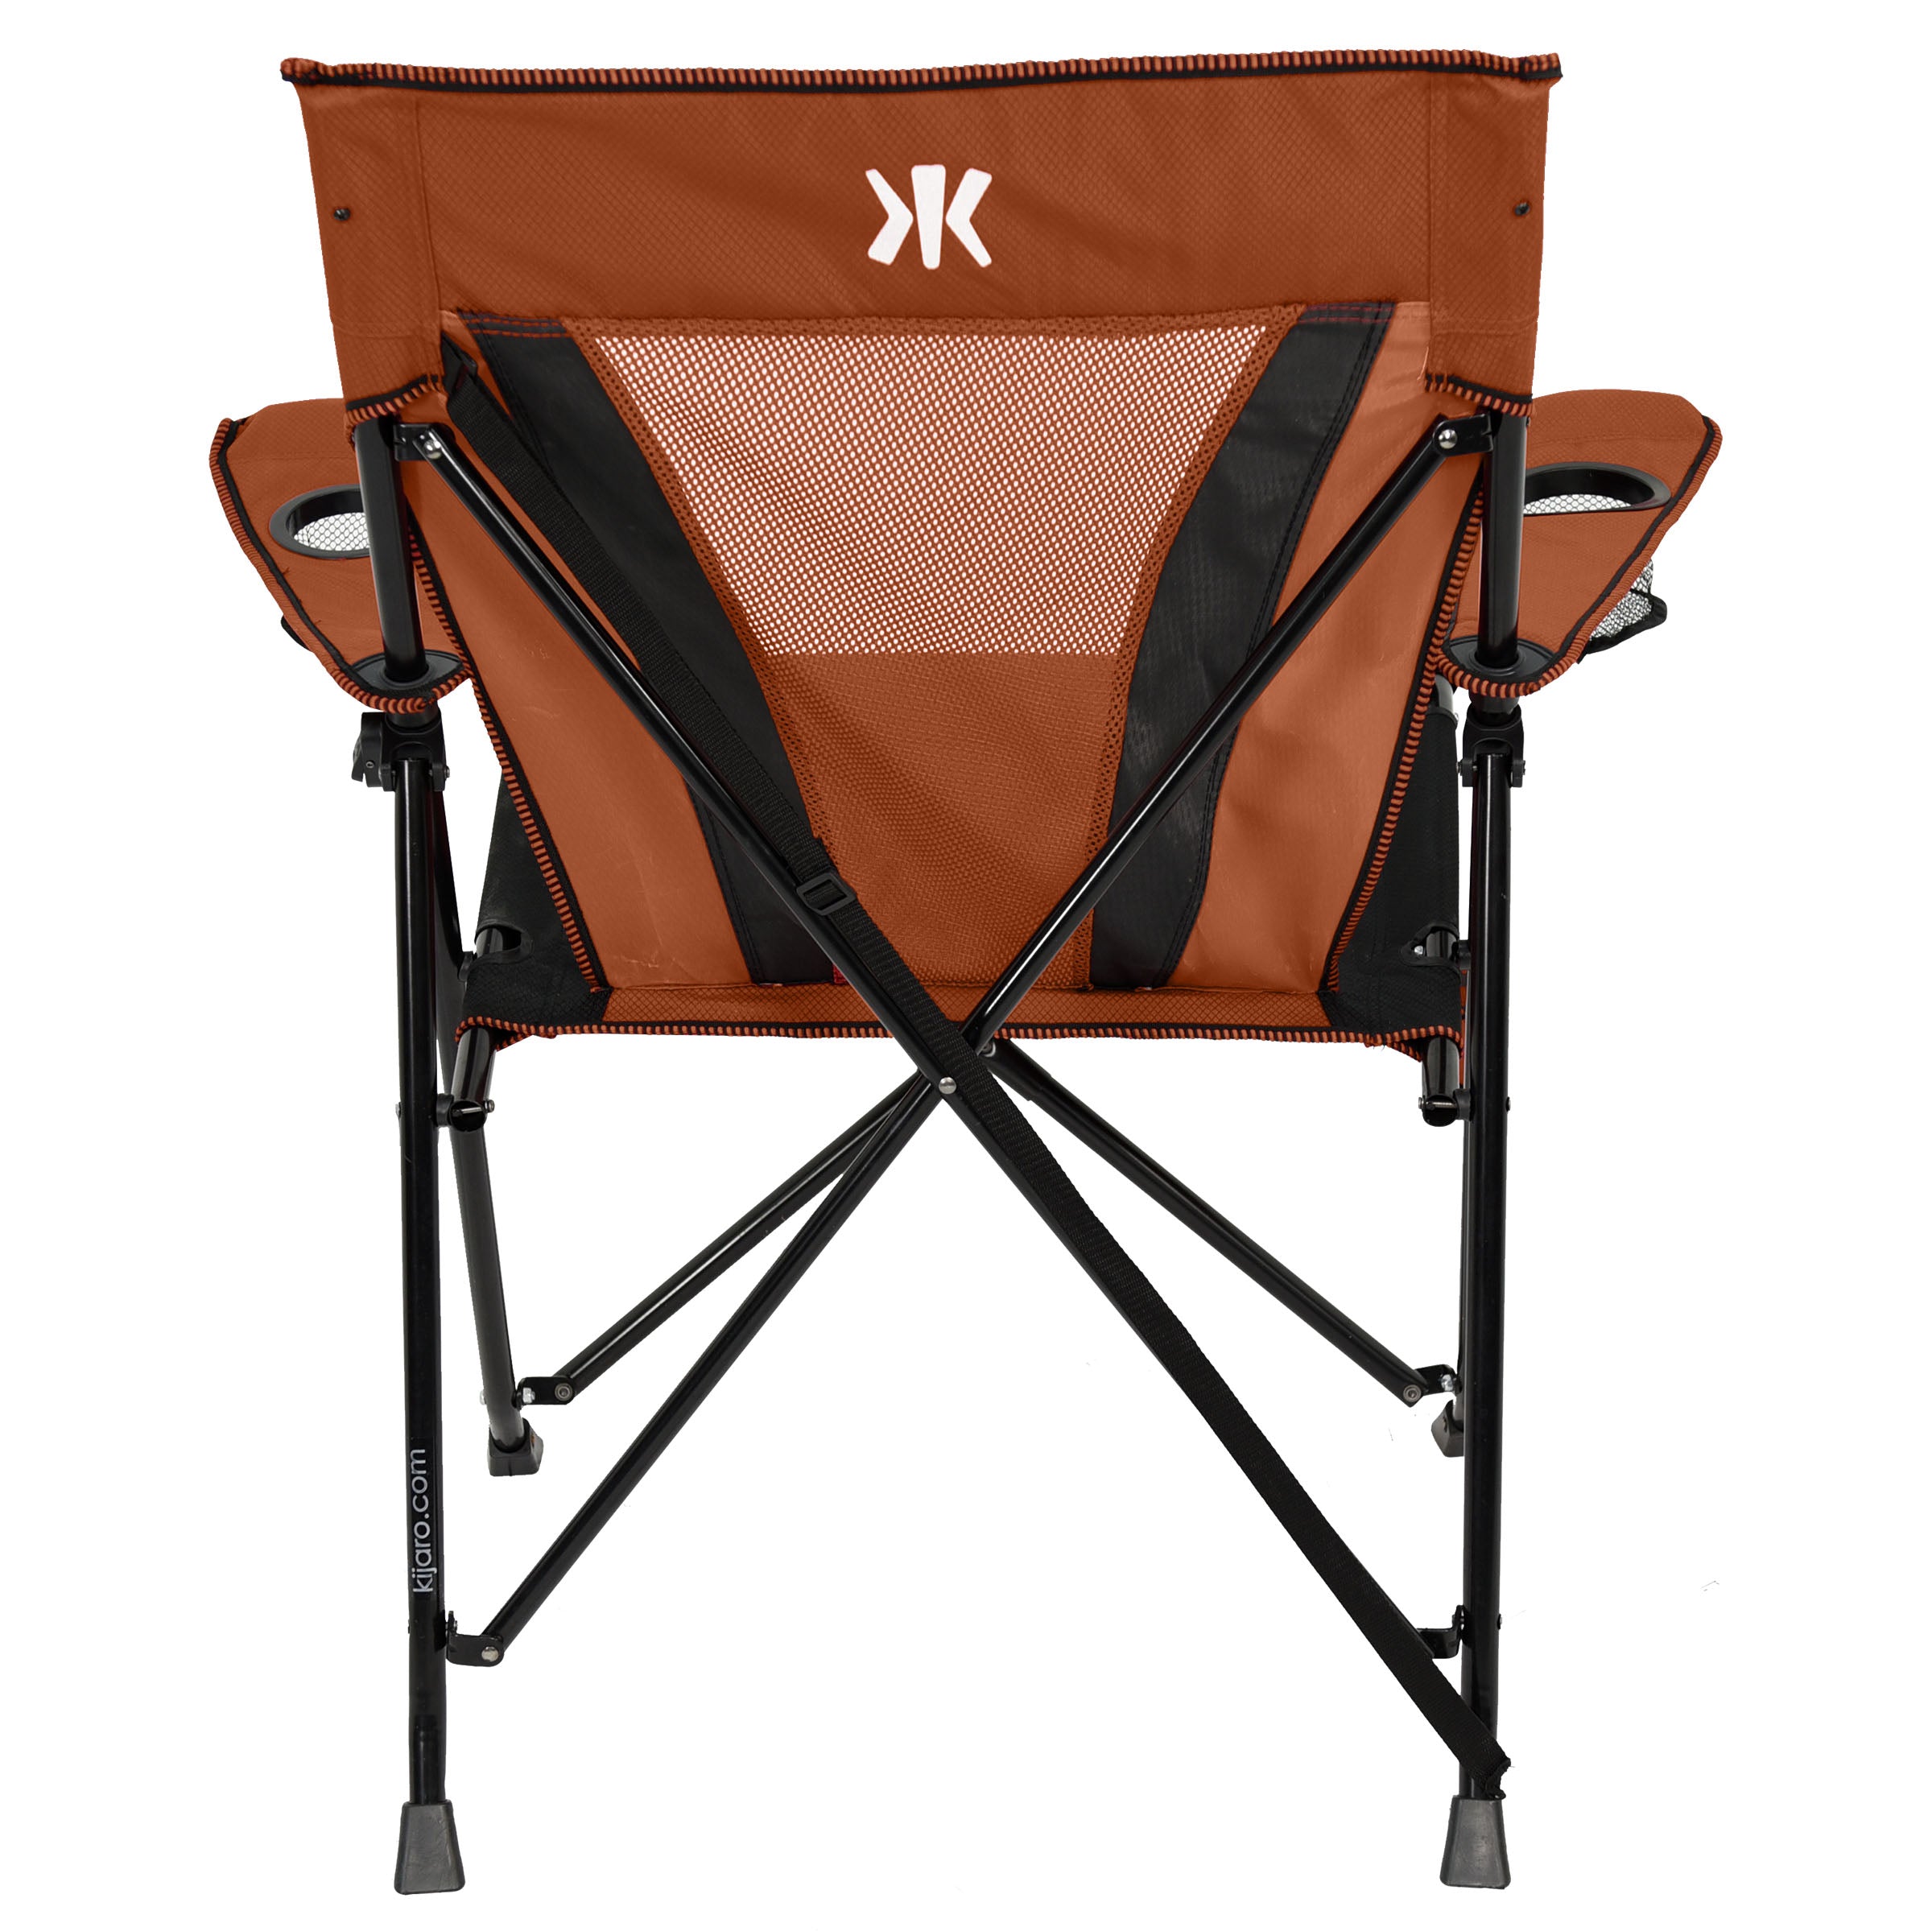 Dual Lock® XXL Chair - 400 lb Weight Capacity